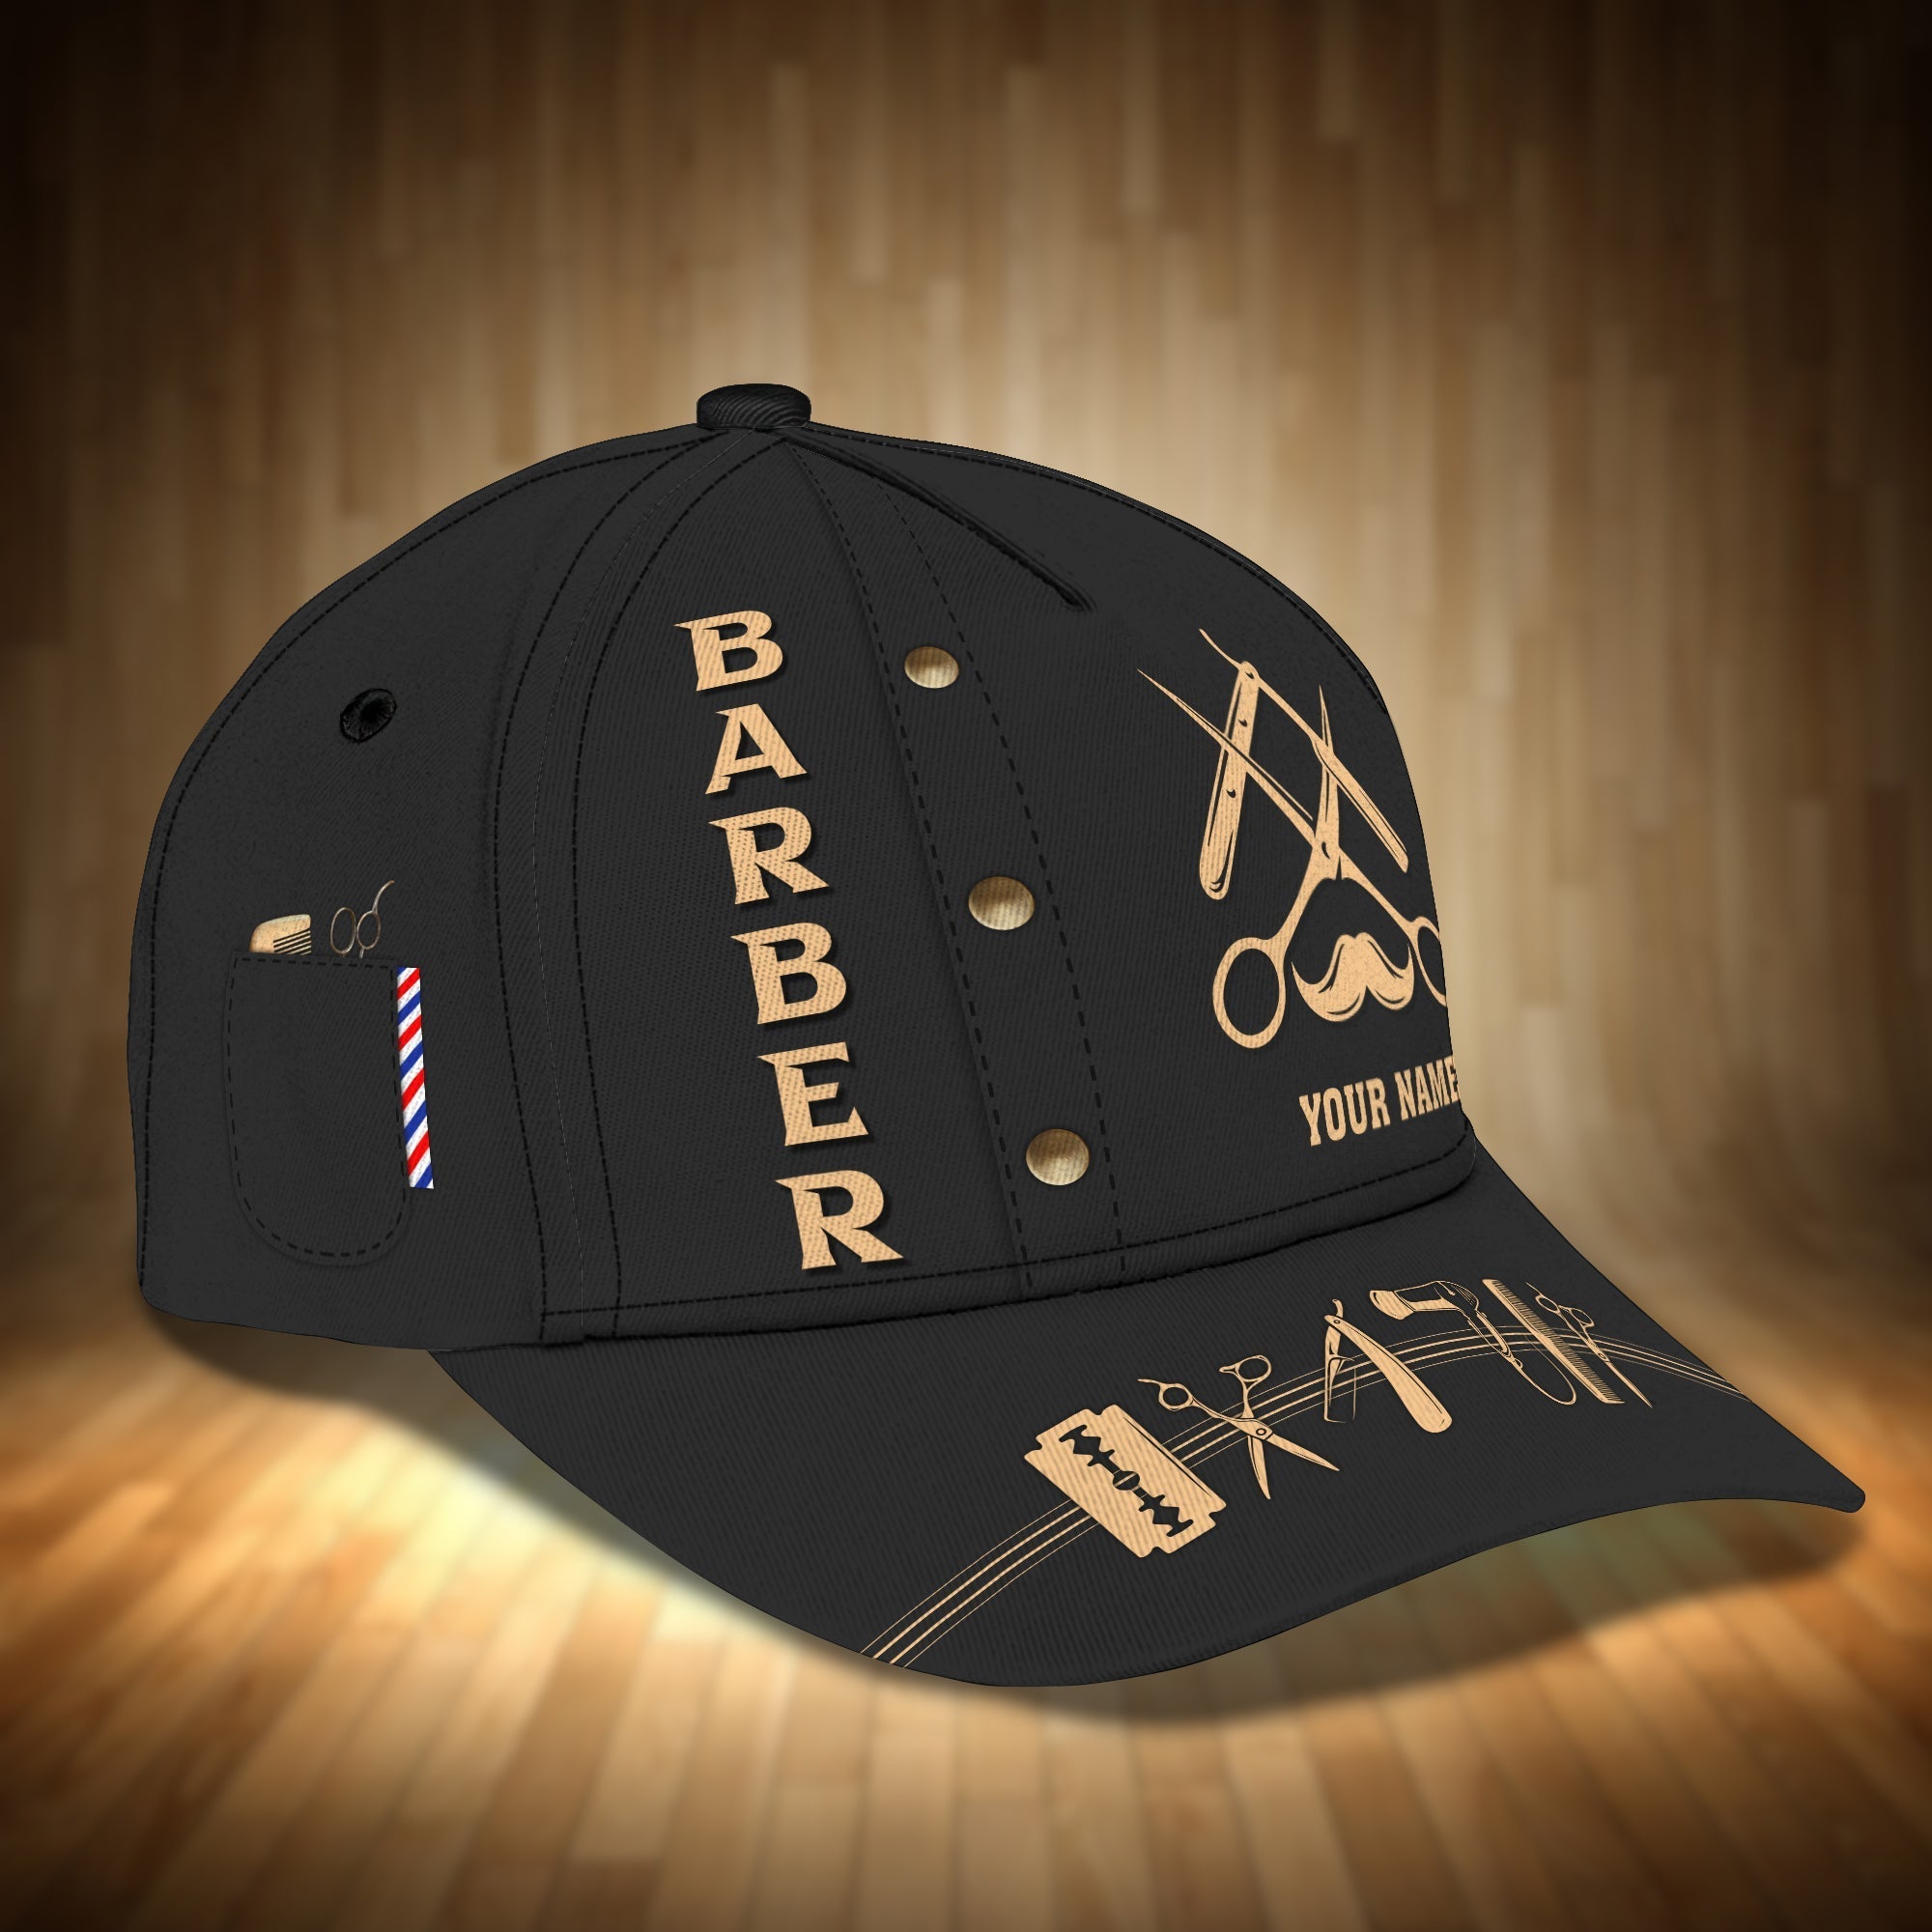 Customized 3D All Over Printed Baseball Cap Hat For Barber Men And Women/ Barber Cap/ Barber Hat/ Gift For Barber